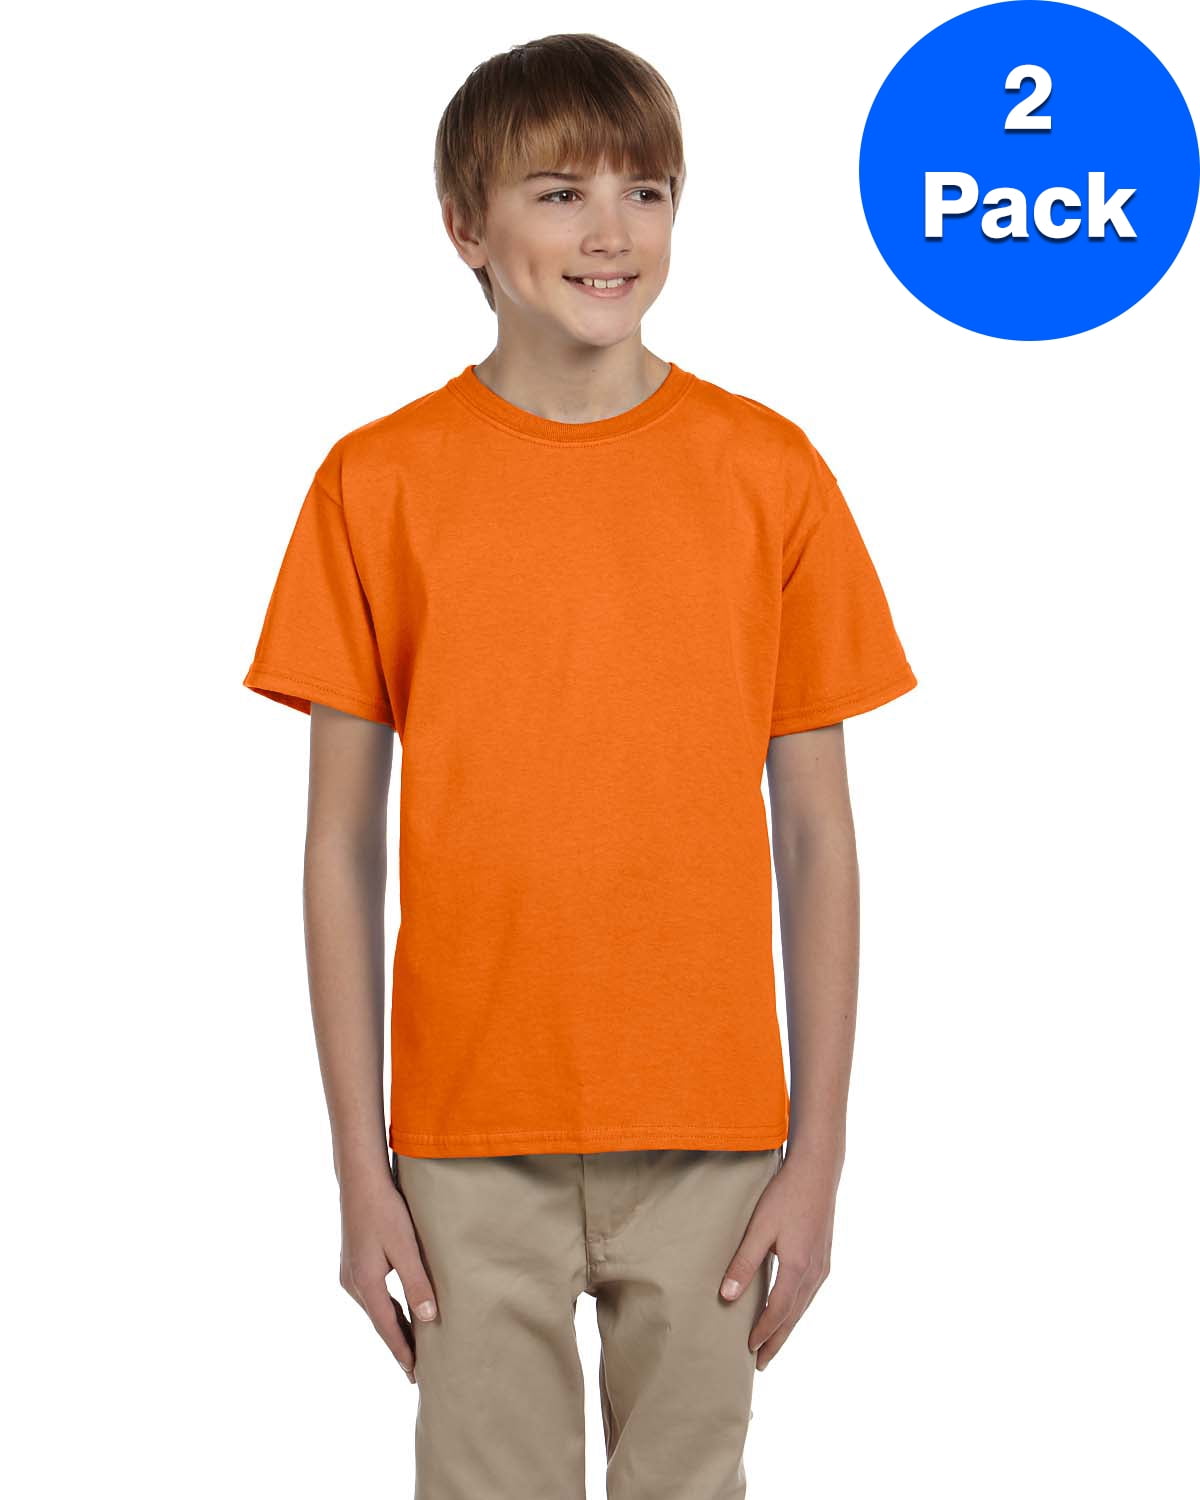 Boys Kids Childrens Childs Plain ORANGE Cotton Short Sleeve T-Shirt Tee Shirt 